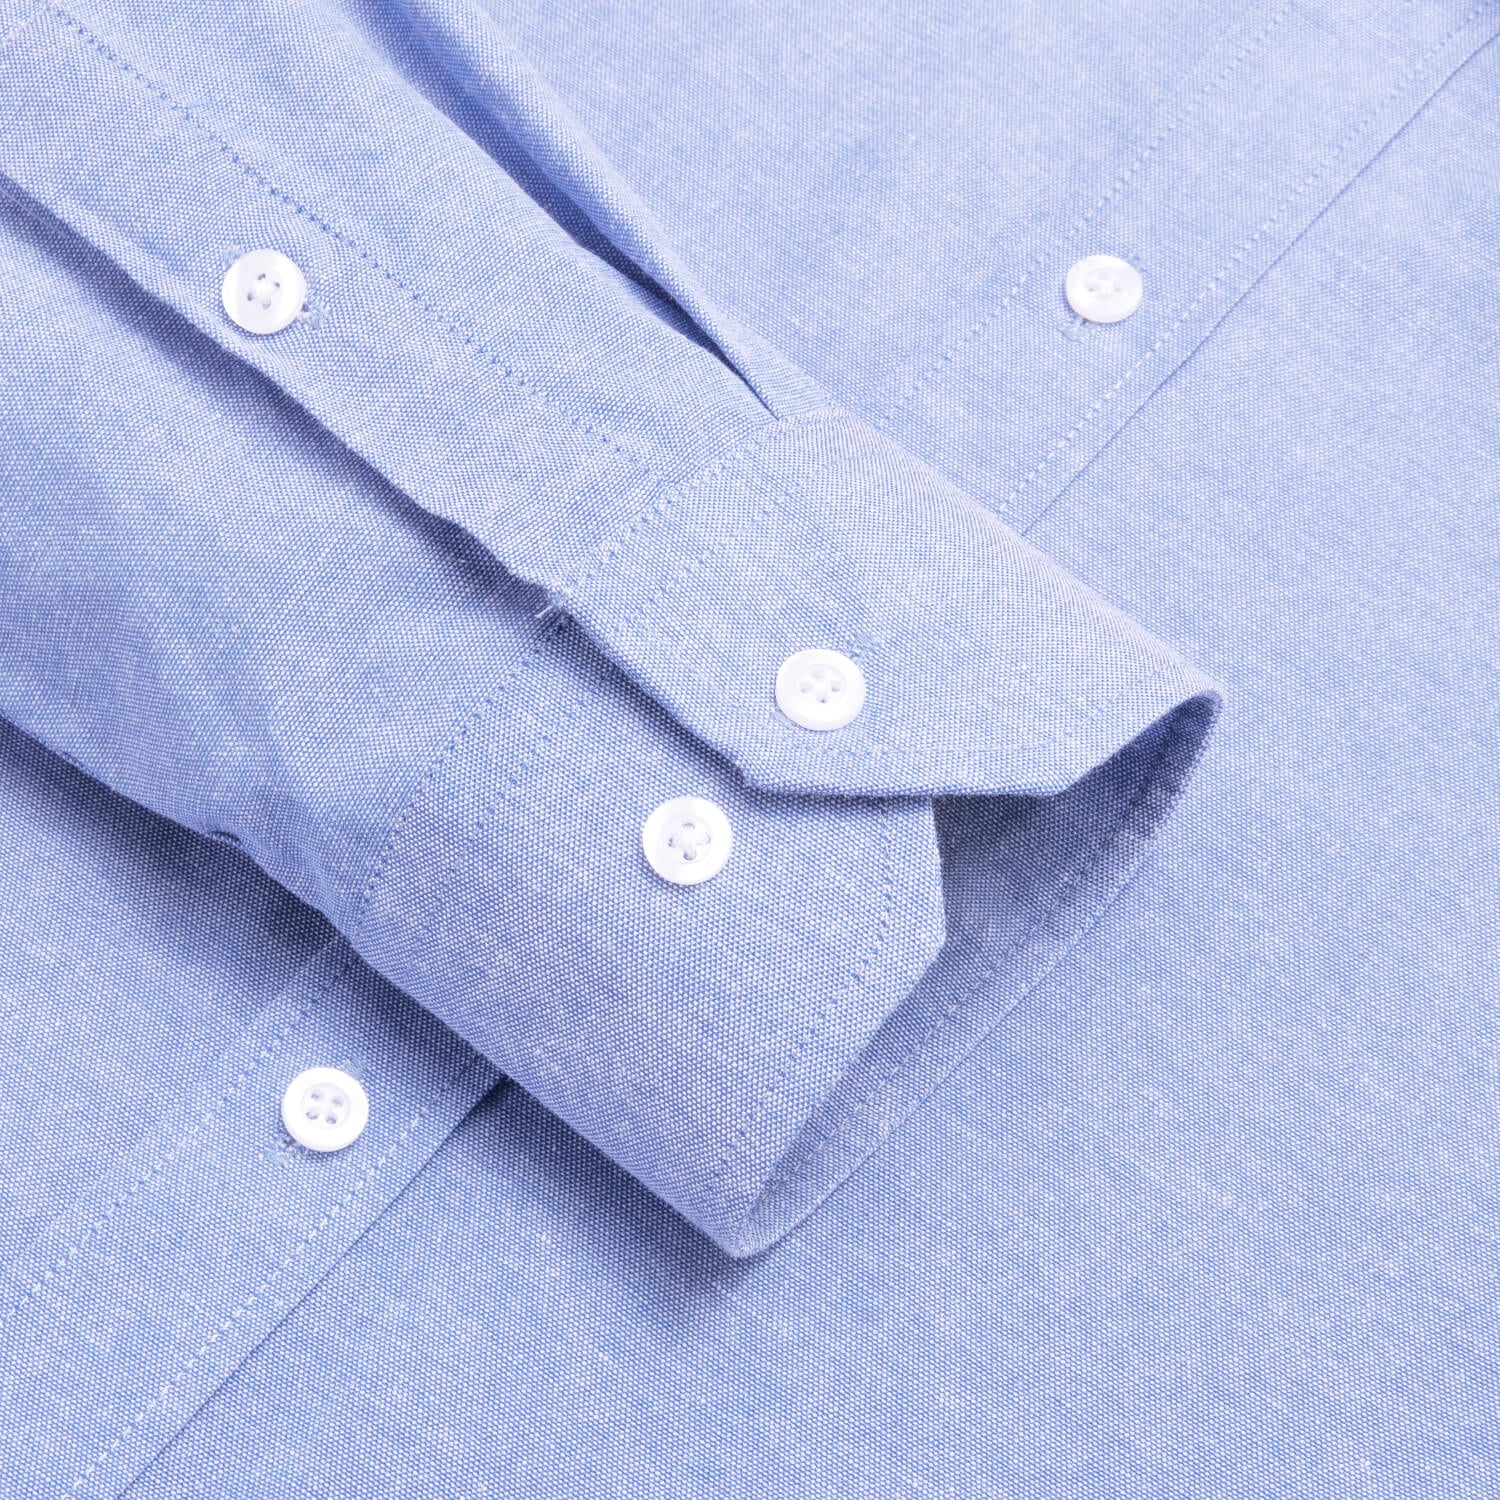 Hi-Tie Button Down Shirt Steel Blue Solid Silk Men's Shirt Business